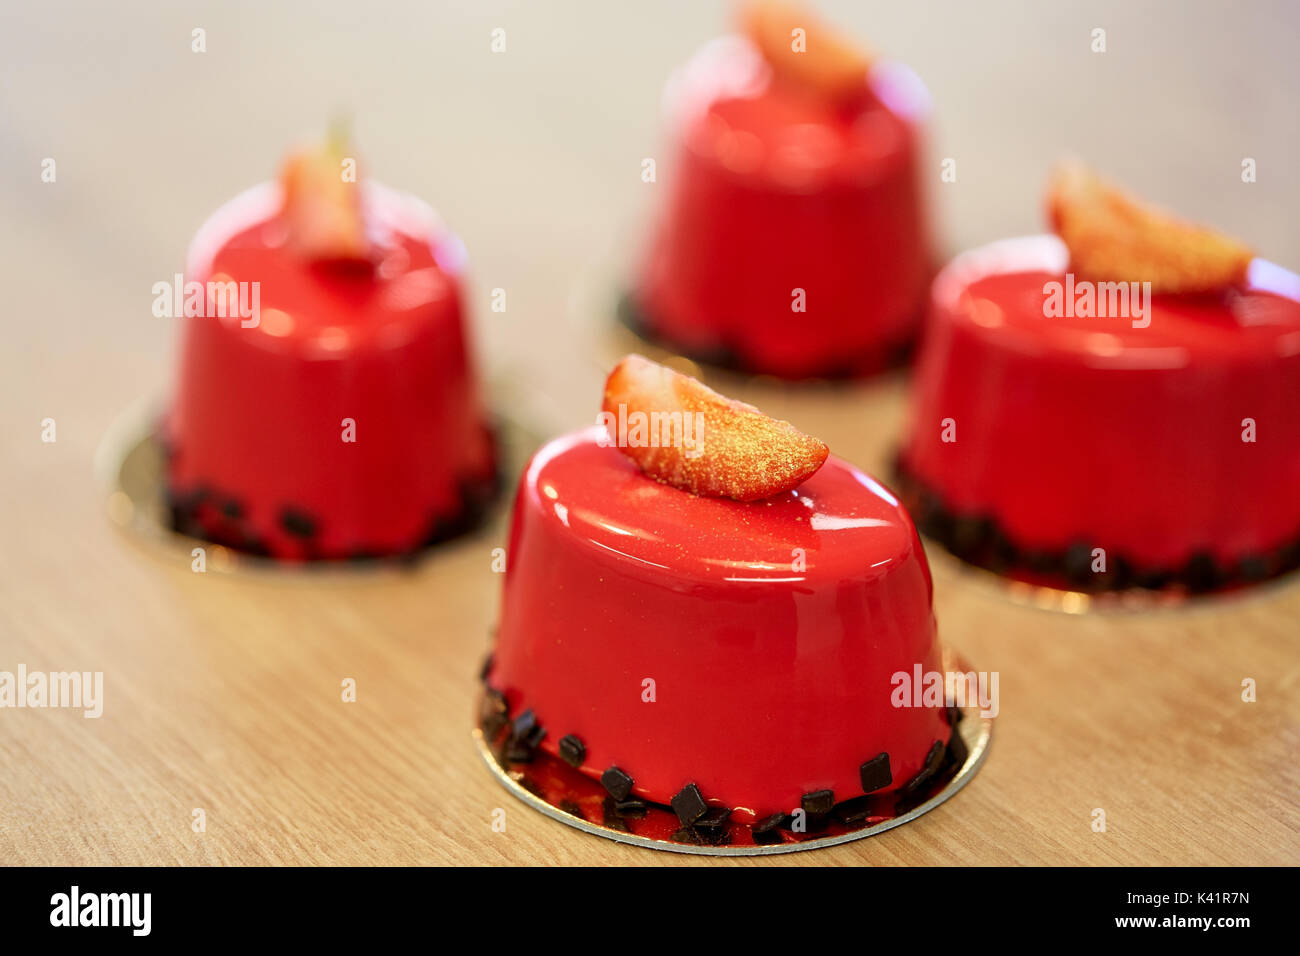 strawberry mirror glaze cakes at confectionery Stock Photo